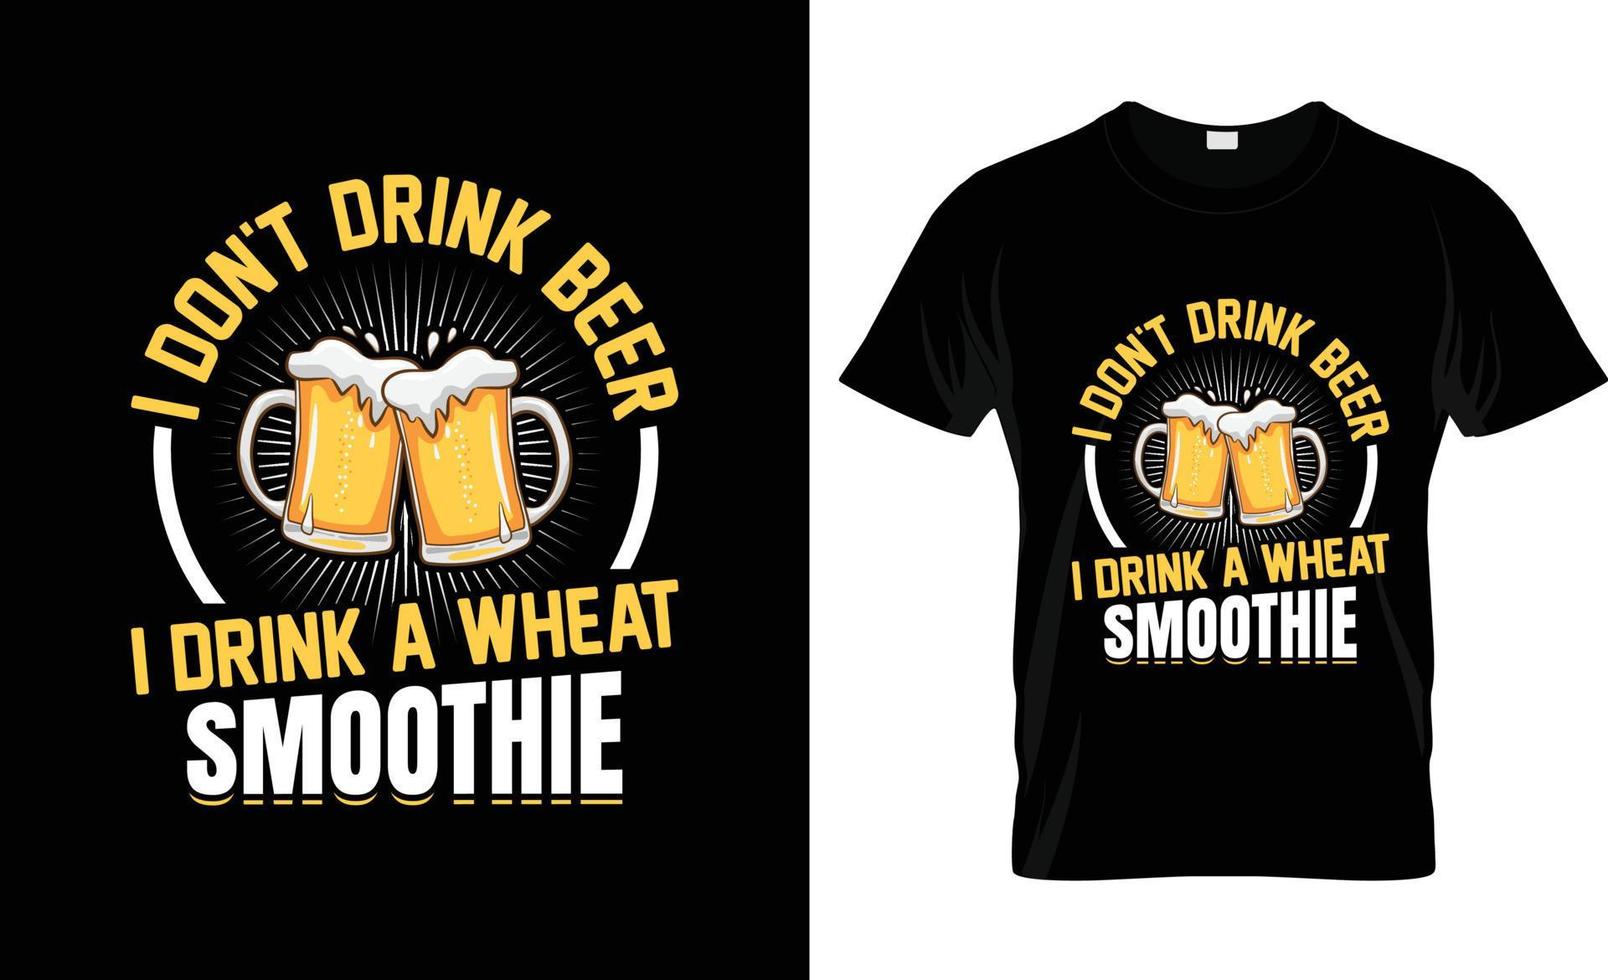 design de camiseta de cerveja artesanal, slogan de camiseta de cerveja artesanal e design de vestuário, tipografia de cerveja artesanal, vetor de cerveja artesanal, ilustração de cerveja artesanal